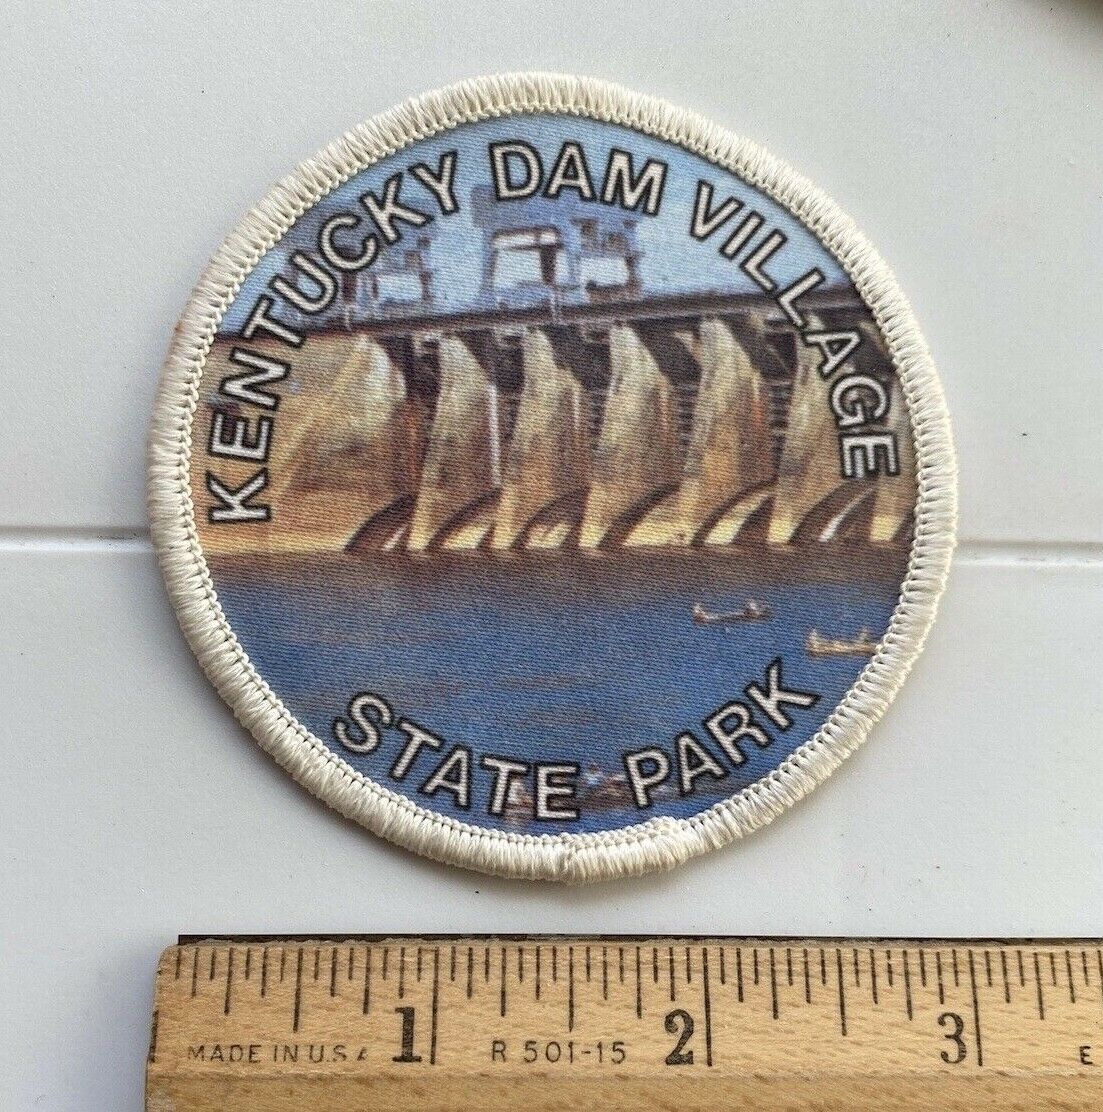 Kentucky Dam Village State Park Photo Print Round Souvenir Patch Badge